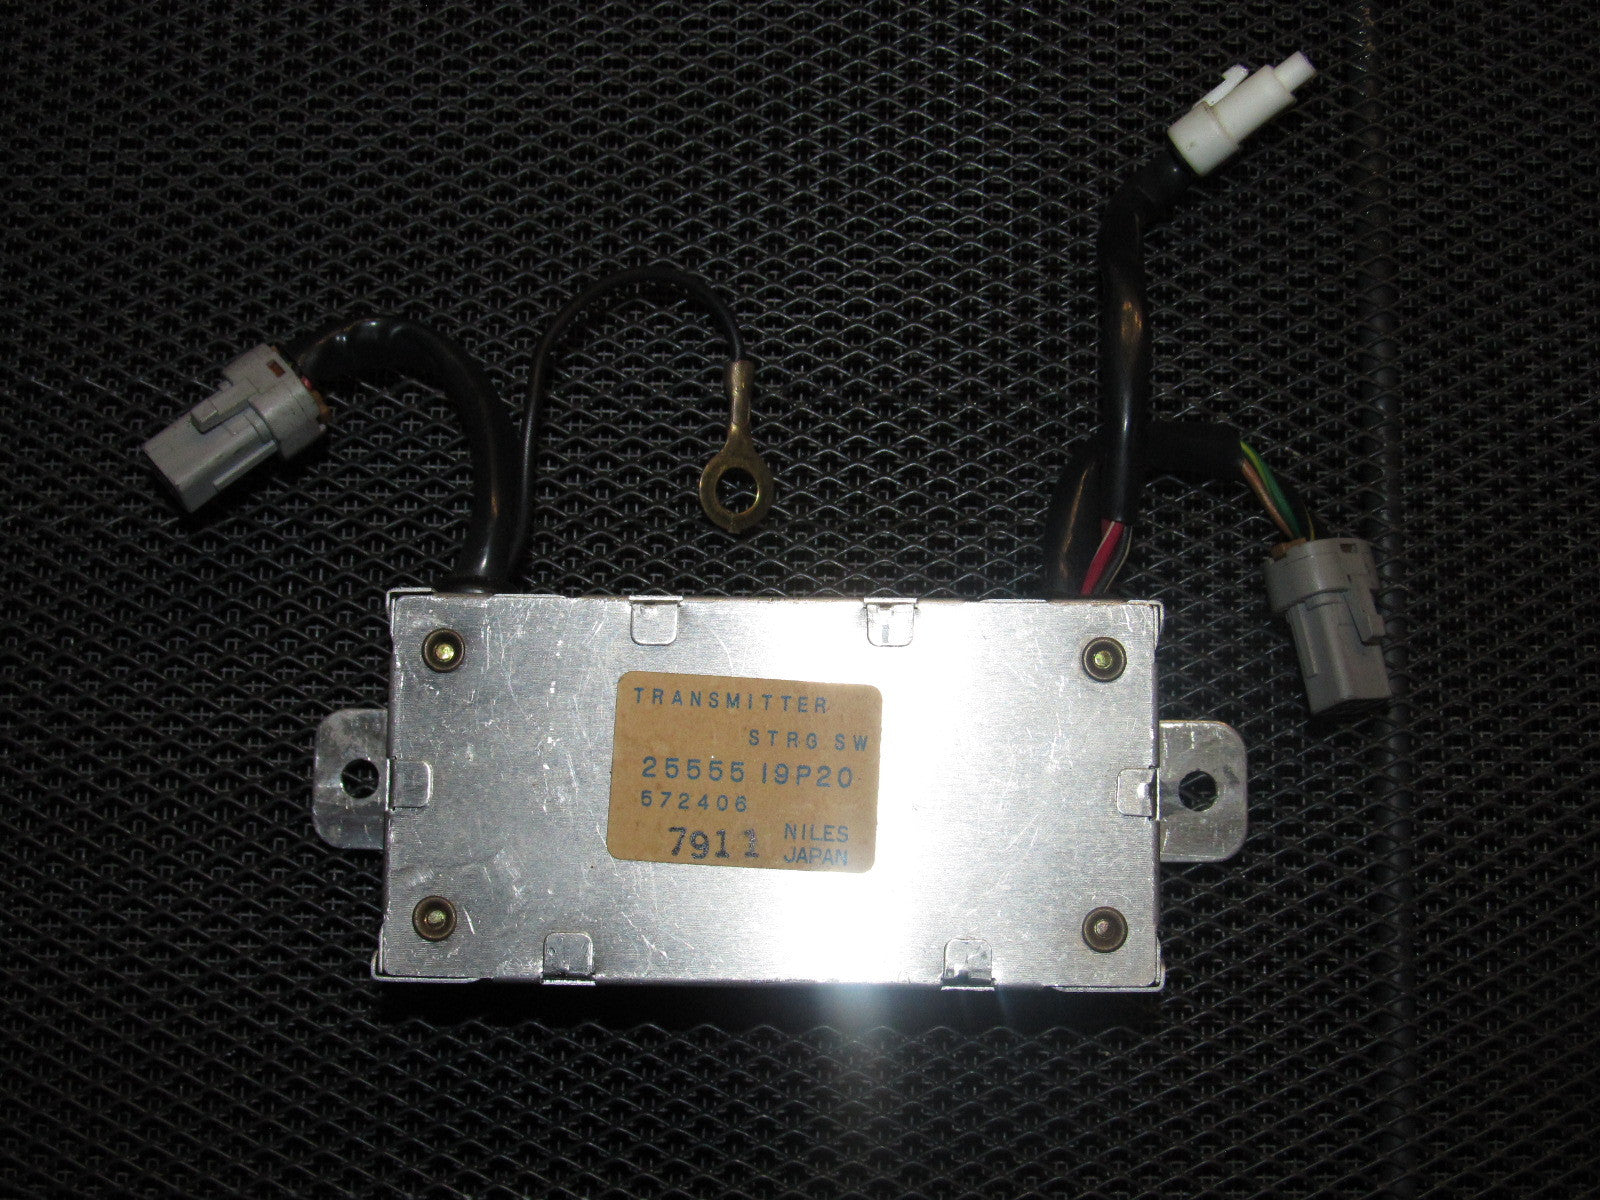  87 88 89 Nissan 300zx OEM Transmitter Strg Sw Unit 25555 19P20